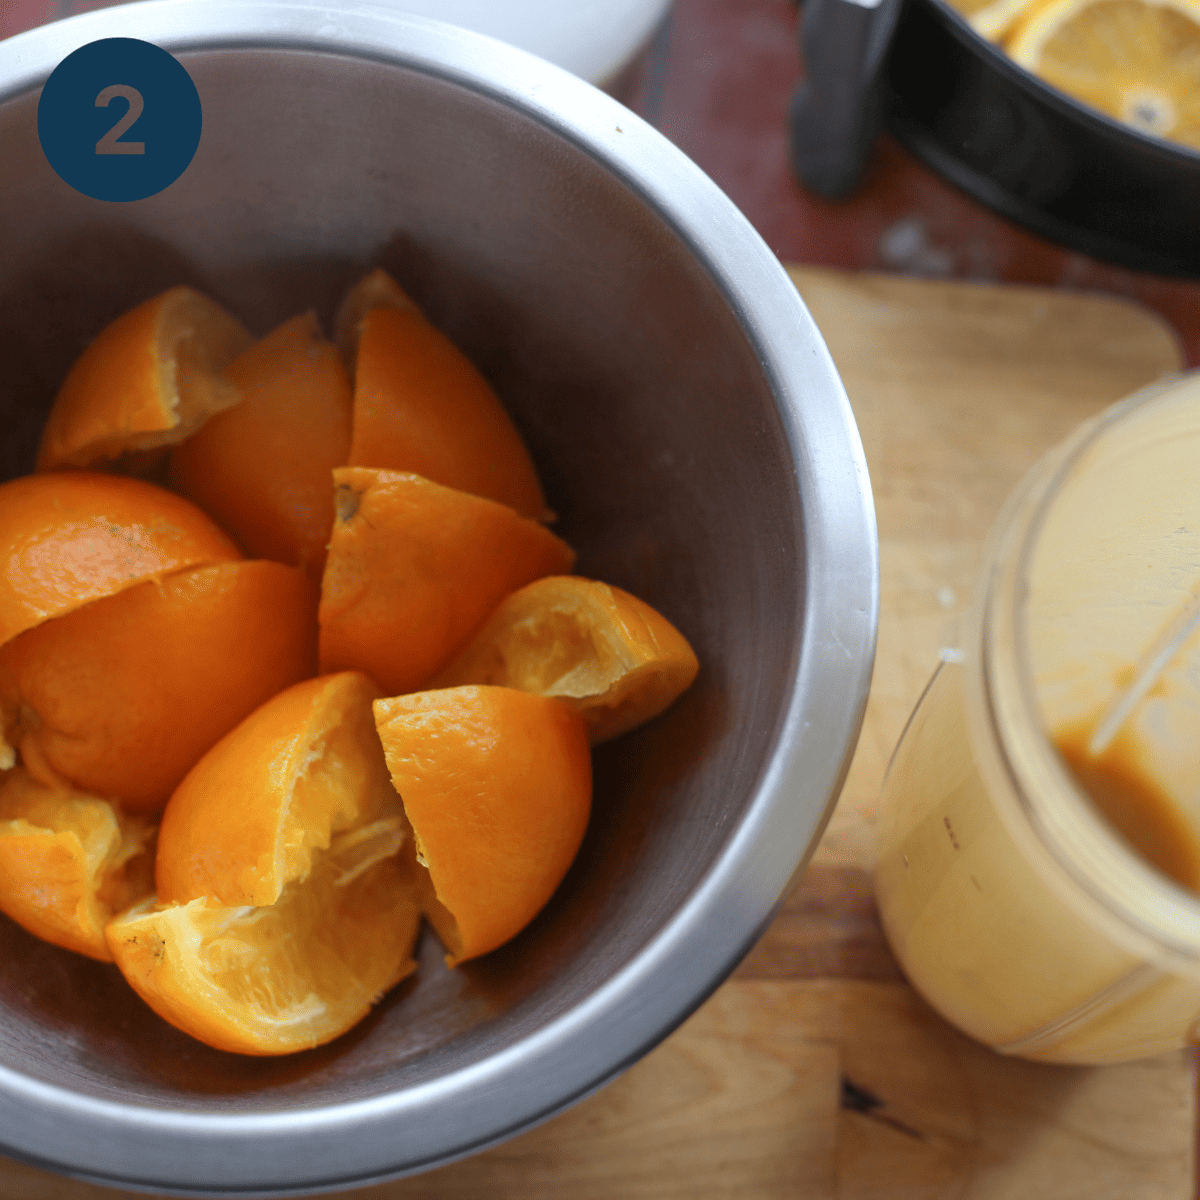 Cutting oranges up for blending.